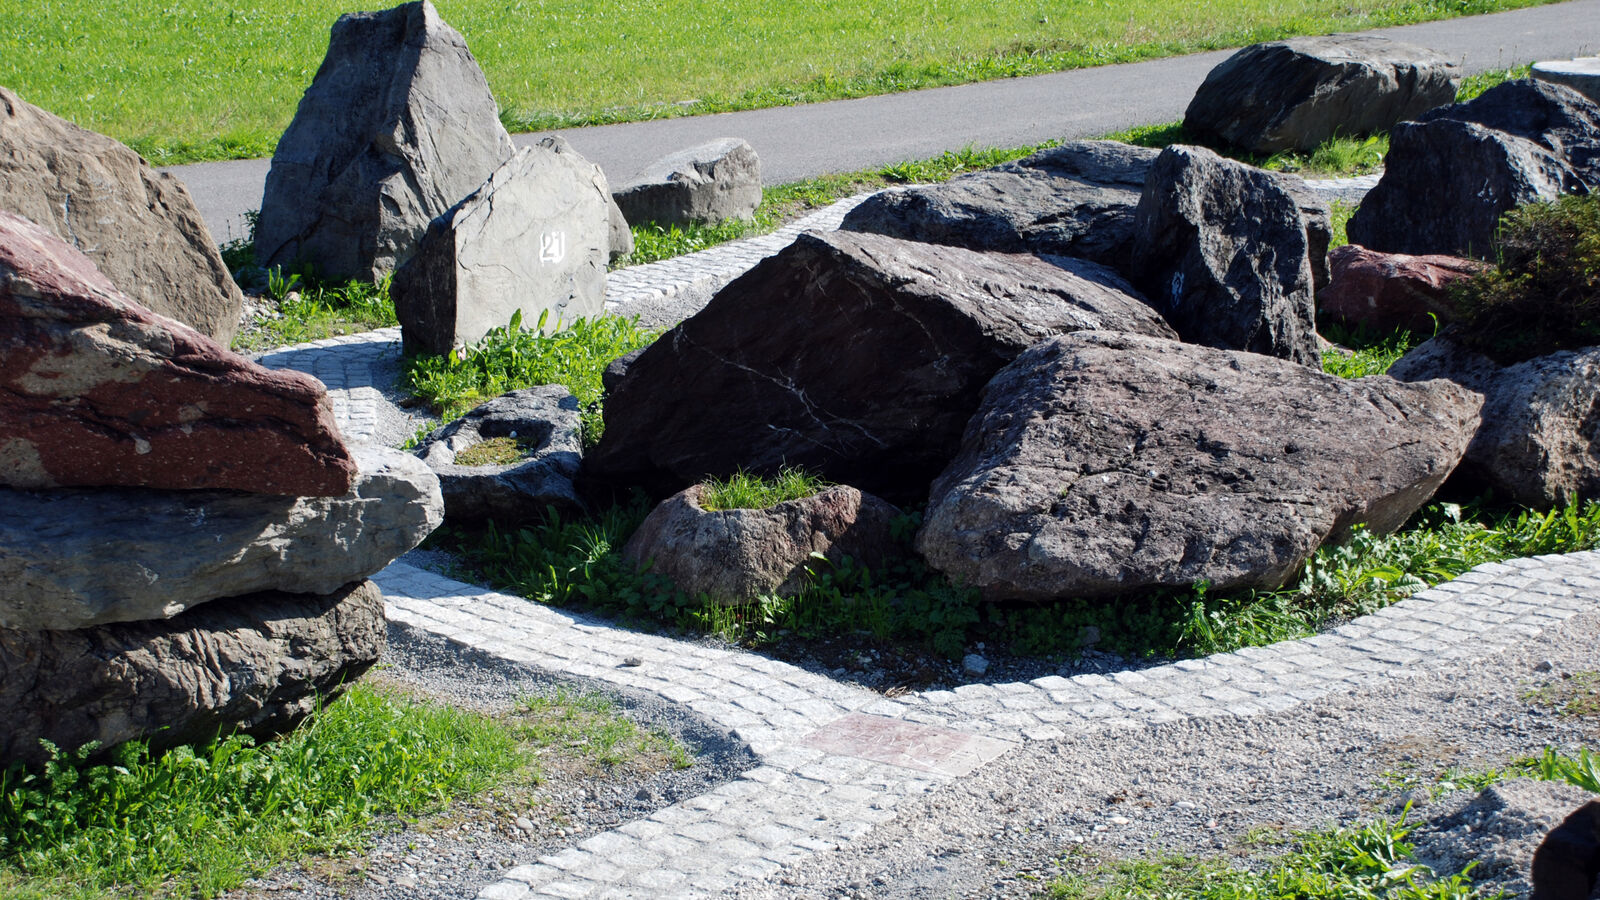 Walk along the stone path through 300 million years of Glarus!